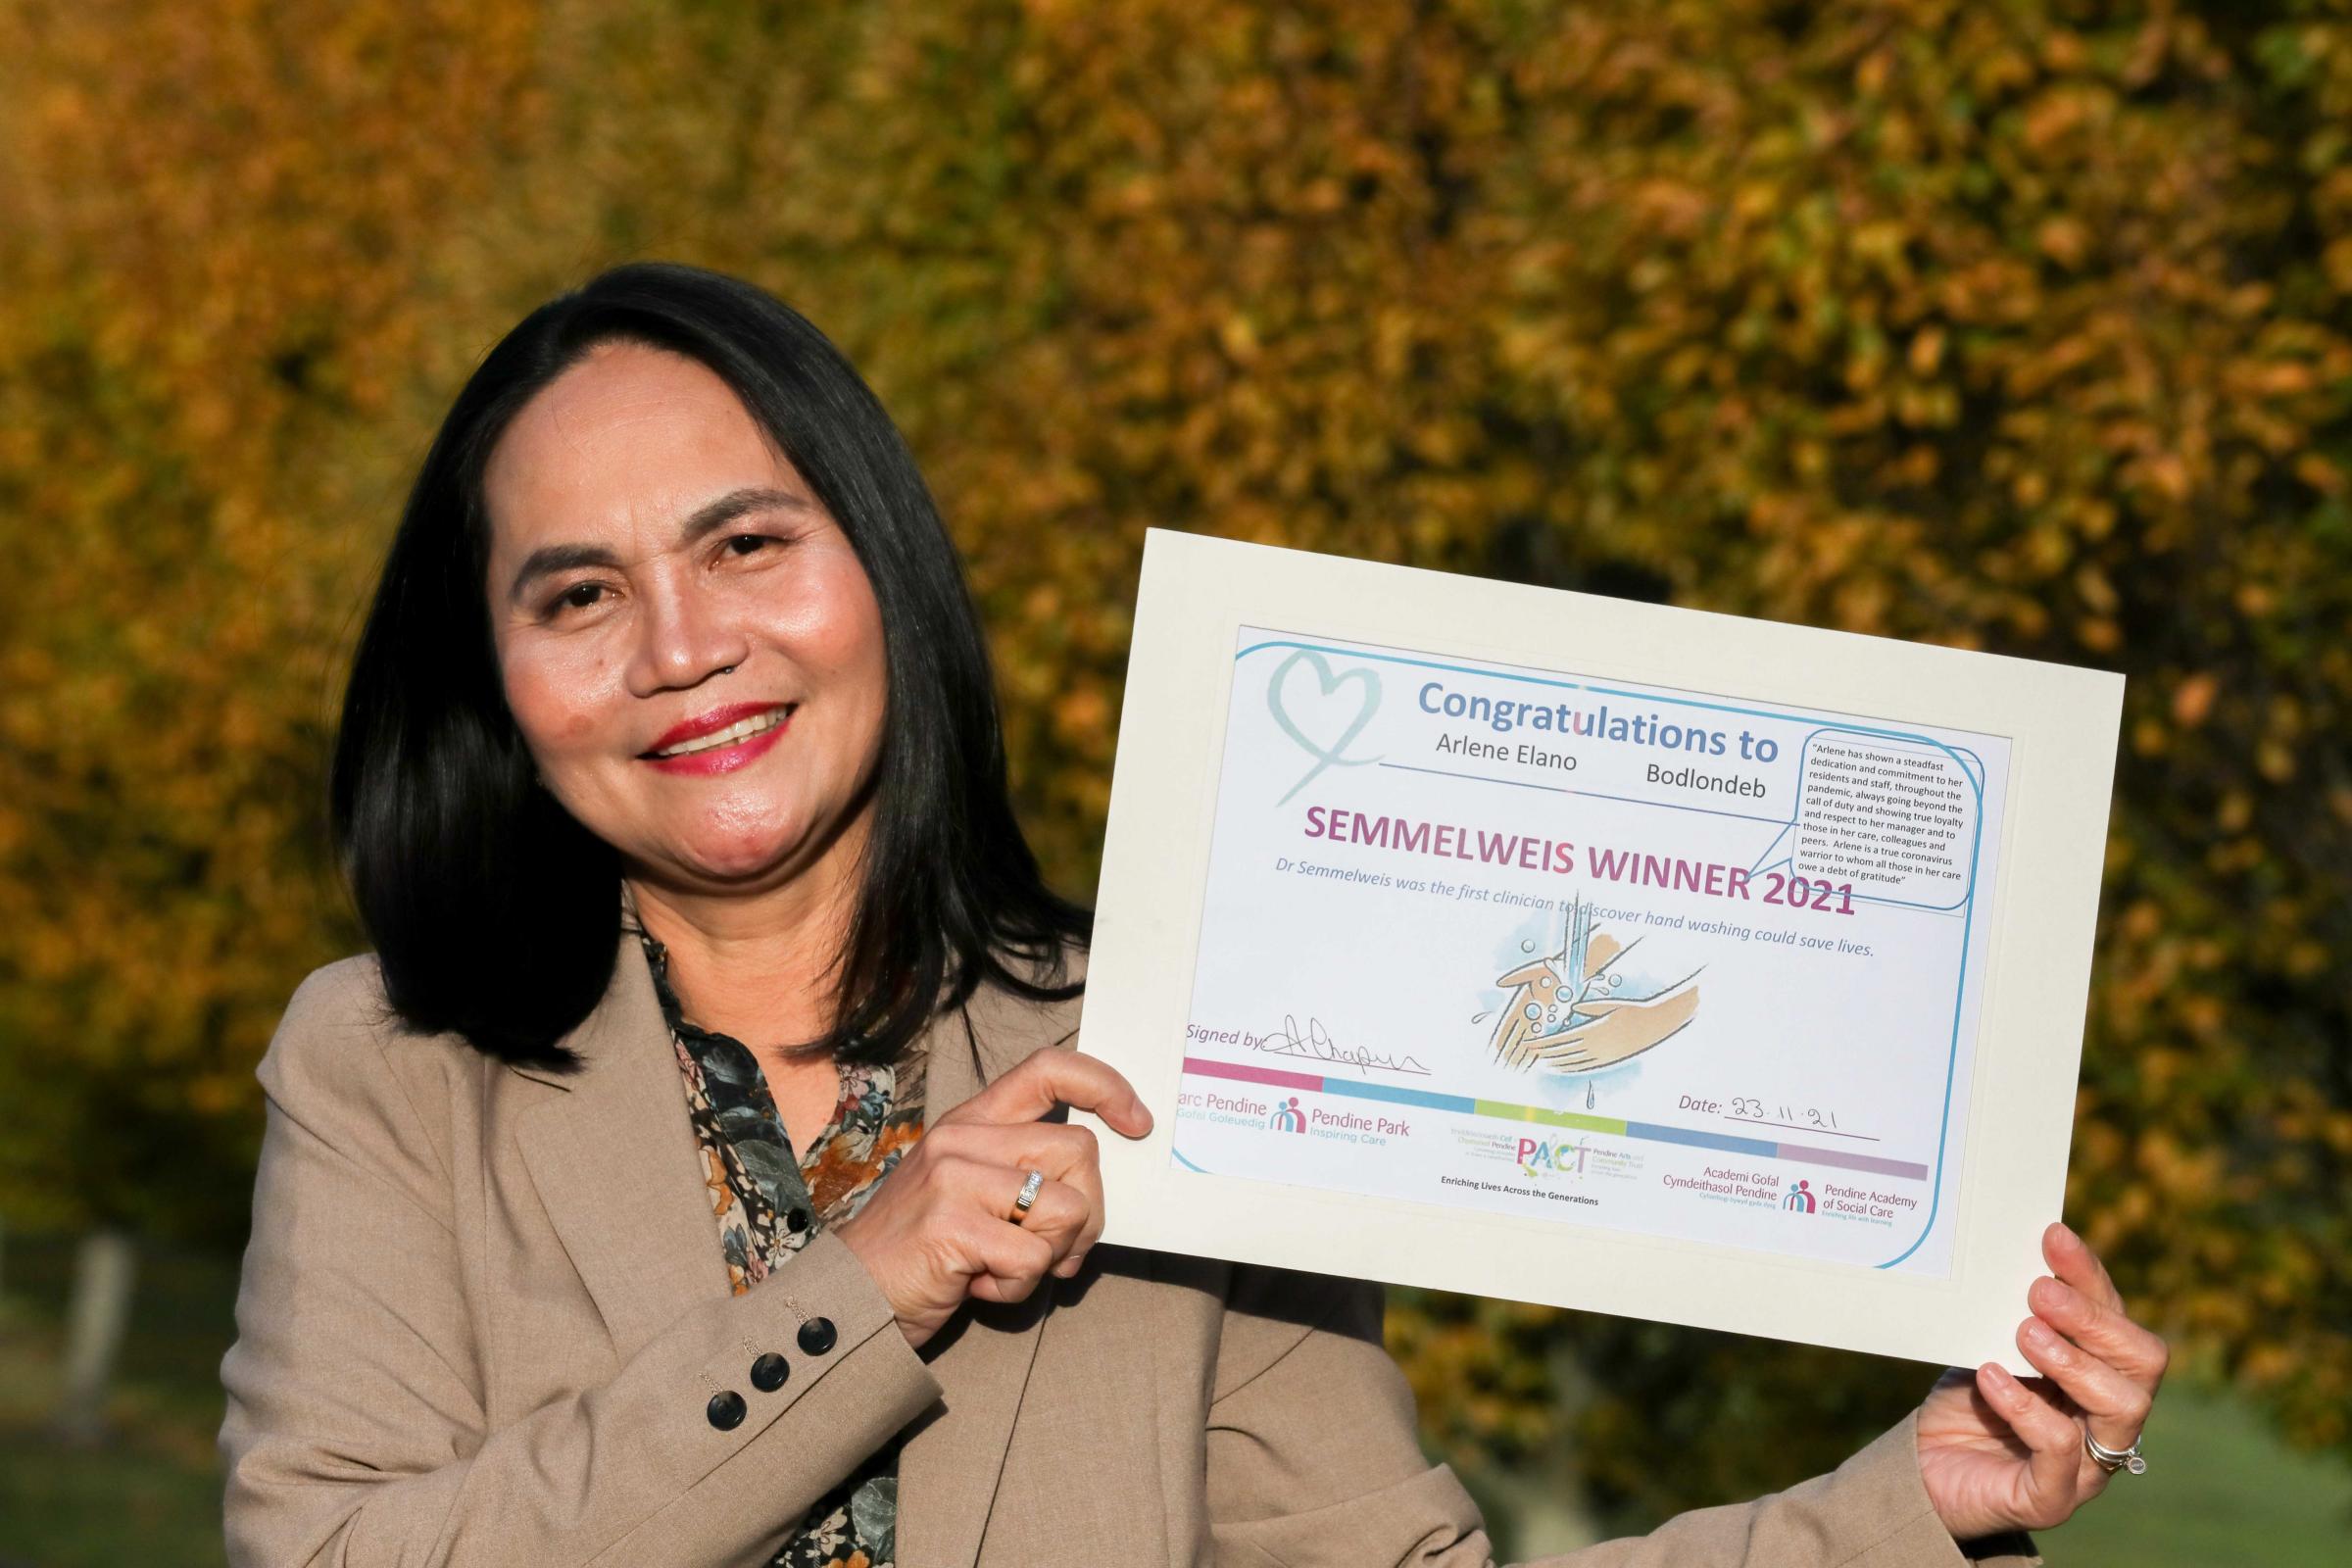 Pendine Park Bodlondeb Arlene Elano received a Semmelweis hygeine award,